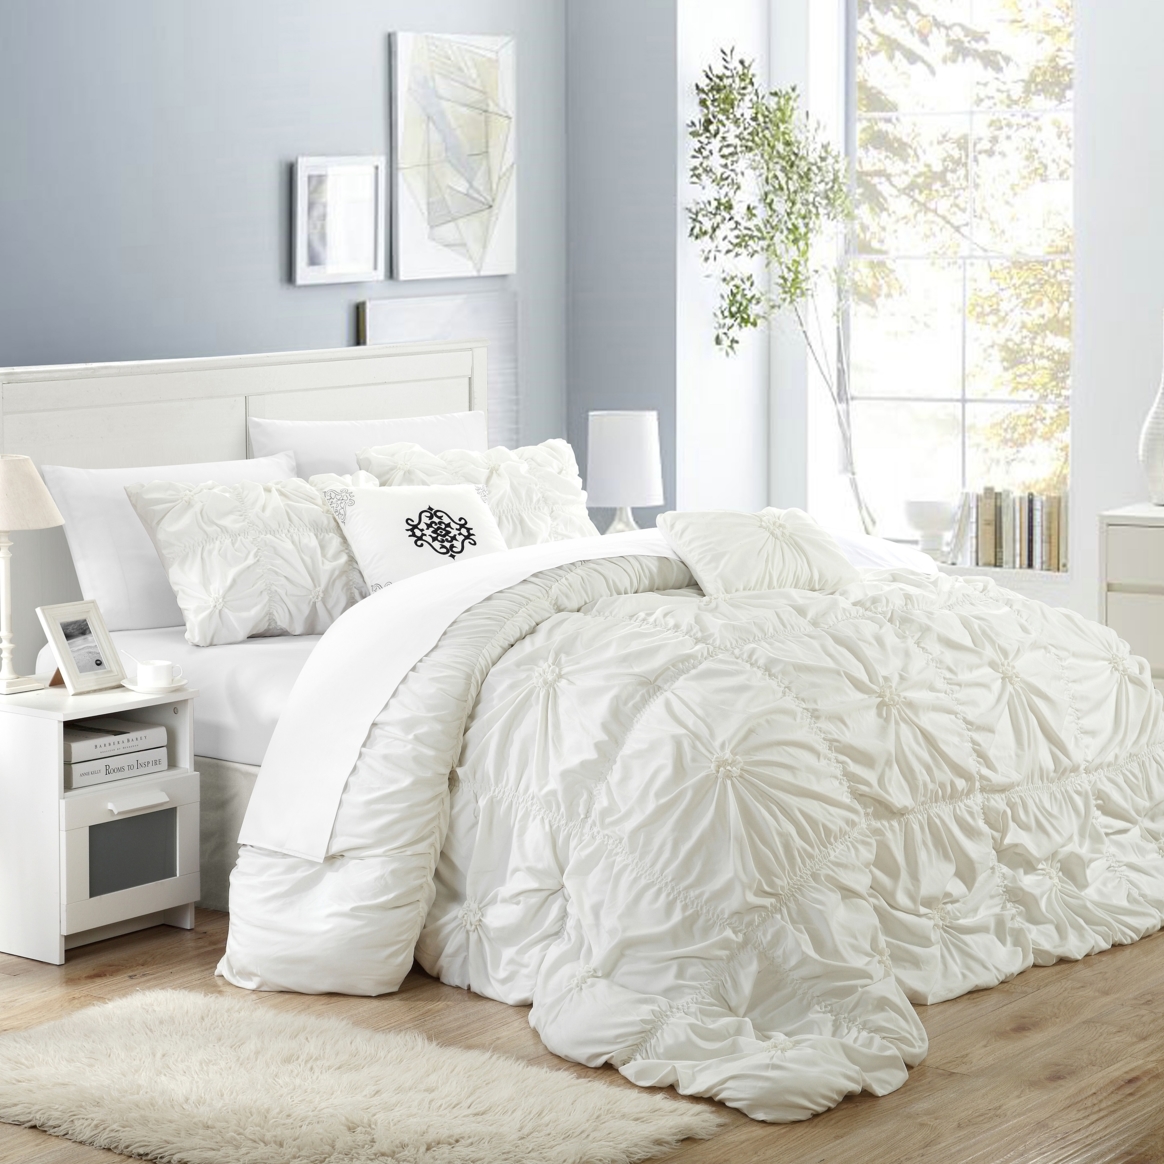 Hilton 10 Piece Comforter Set Floral Pinch Pleated Ruffled Designer Embellished Bed In A Bag Bedding - Lavender, Queen